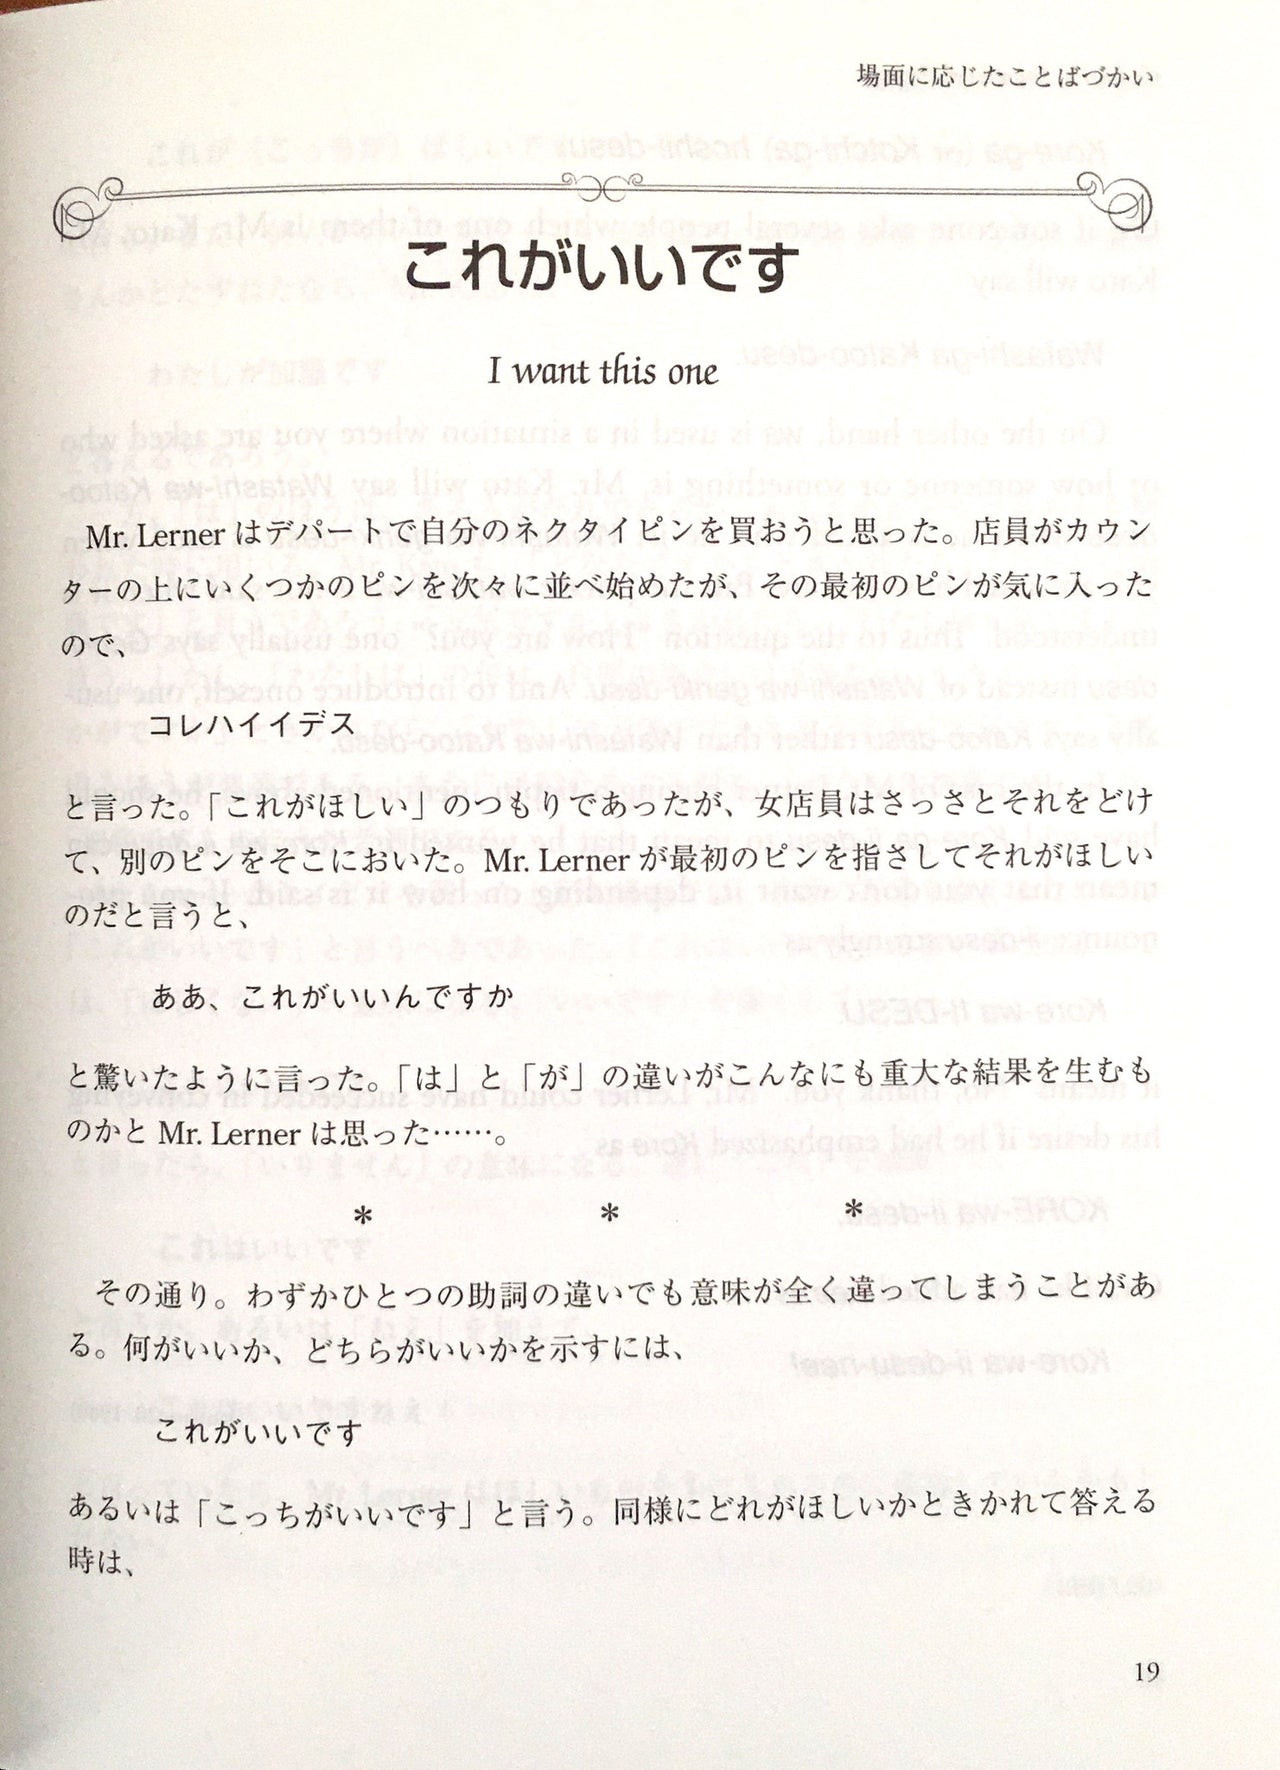 Nihongo Notes Vol. 2: Language and Communication - The Japan Shop